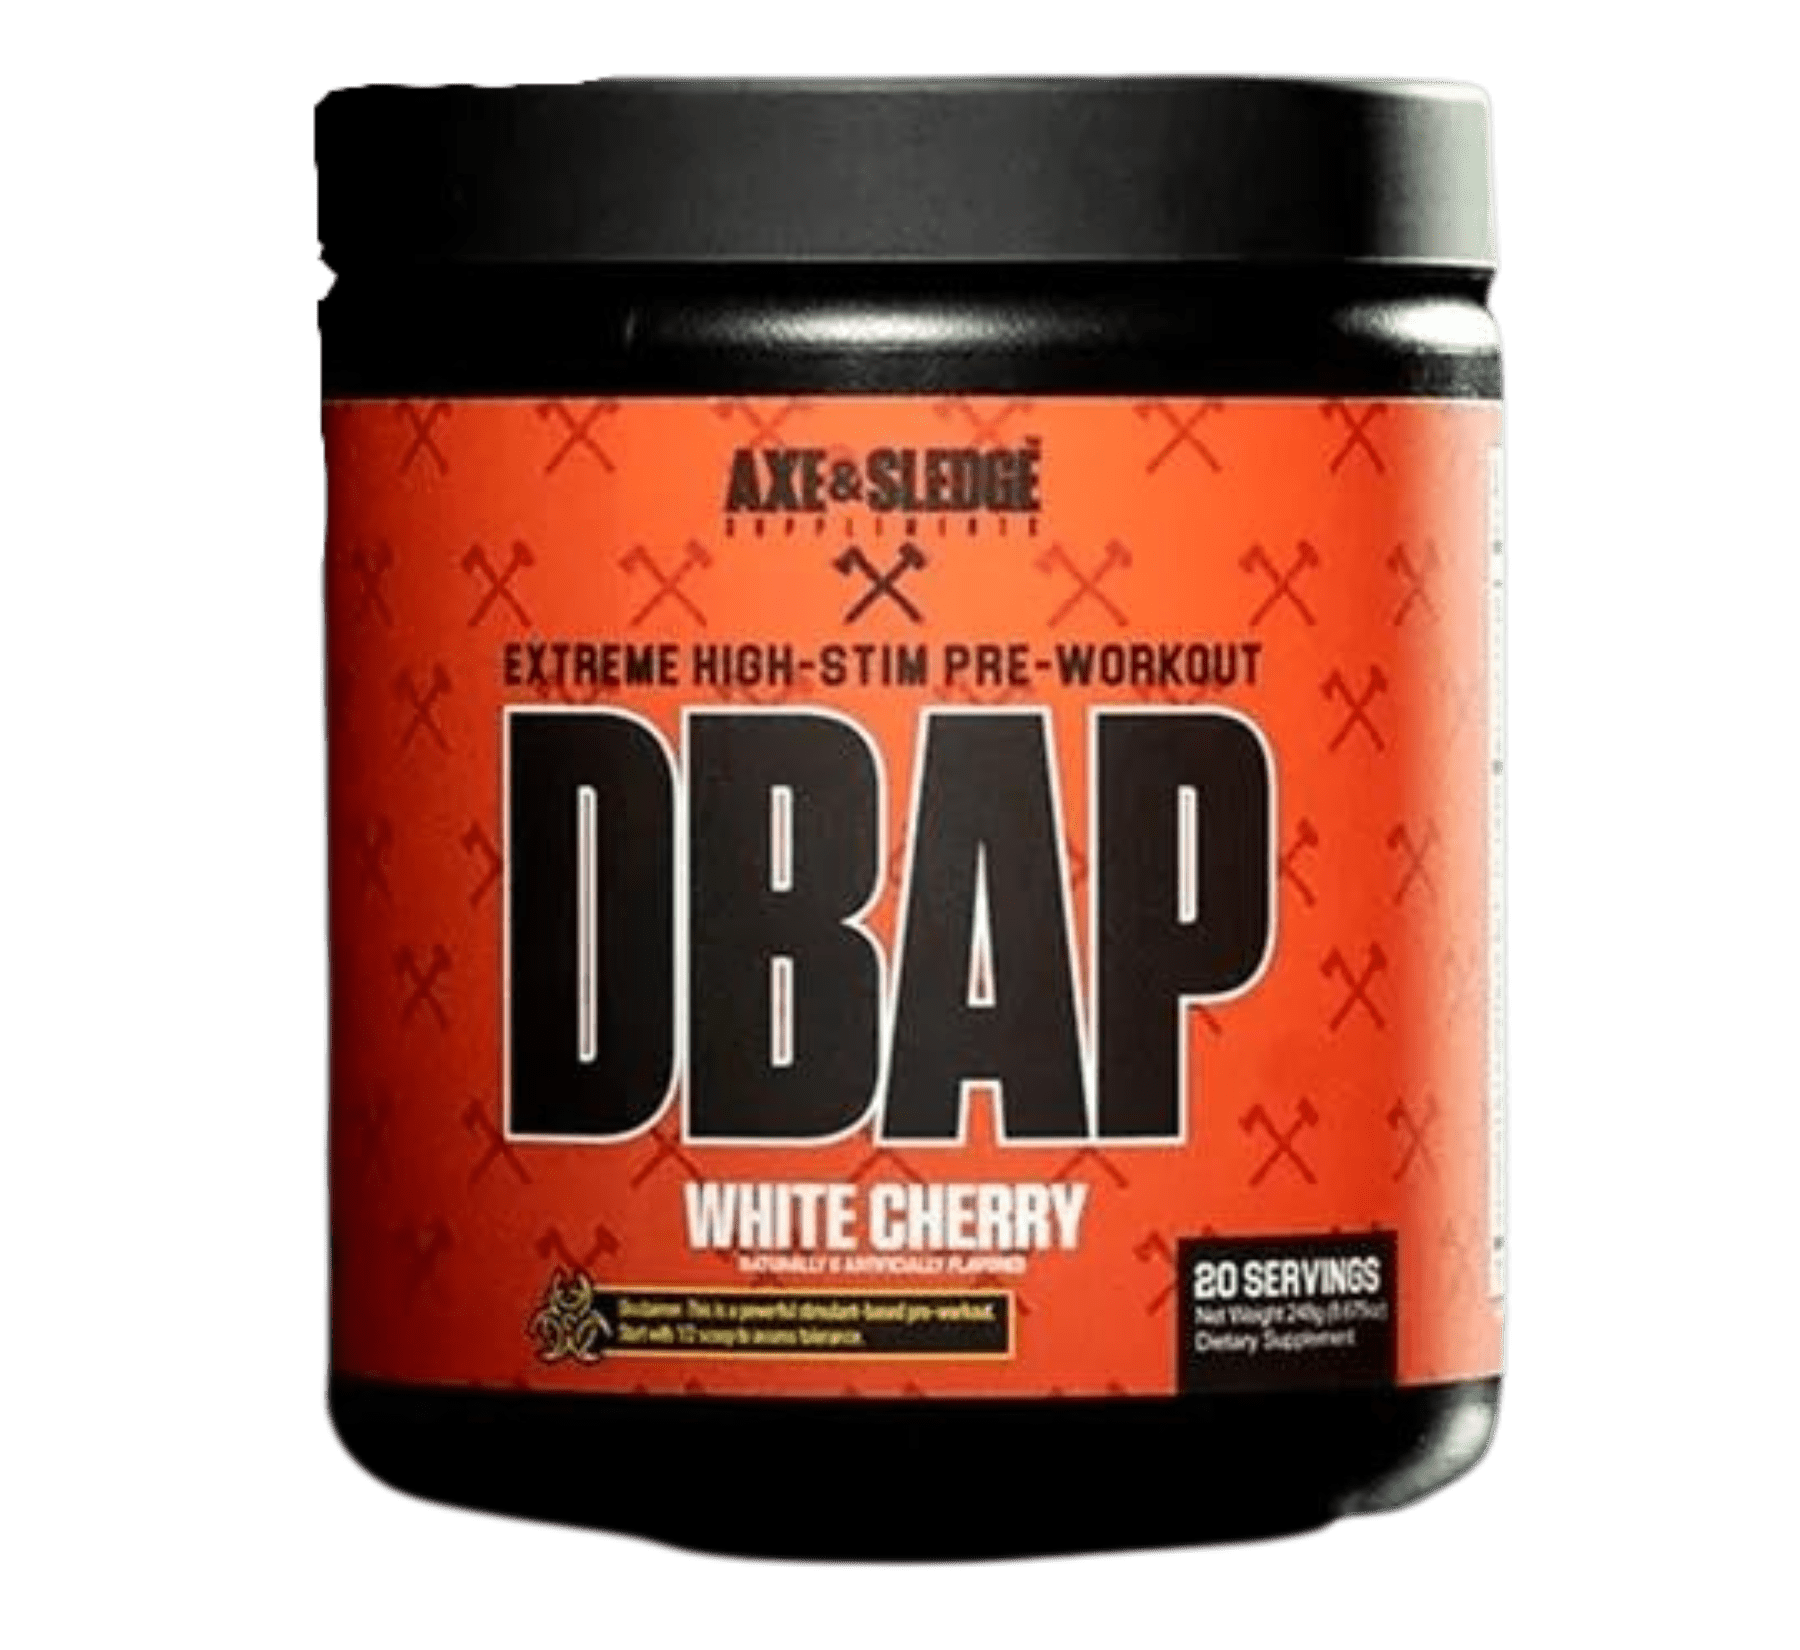 Axe & Sledge DBAP Pre Workout - Bemoxie Supplements